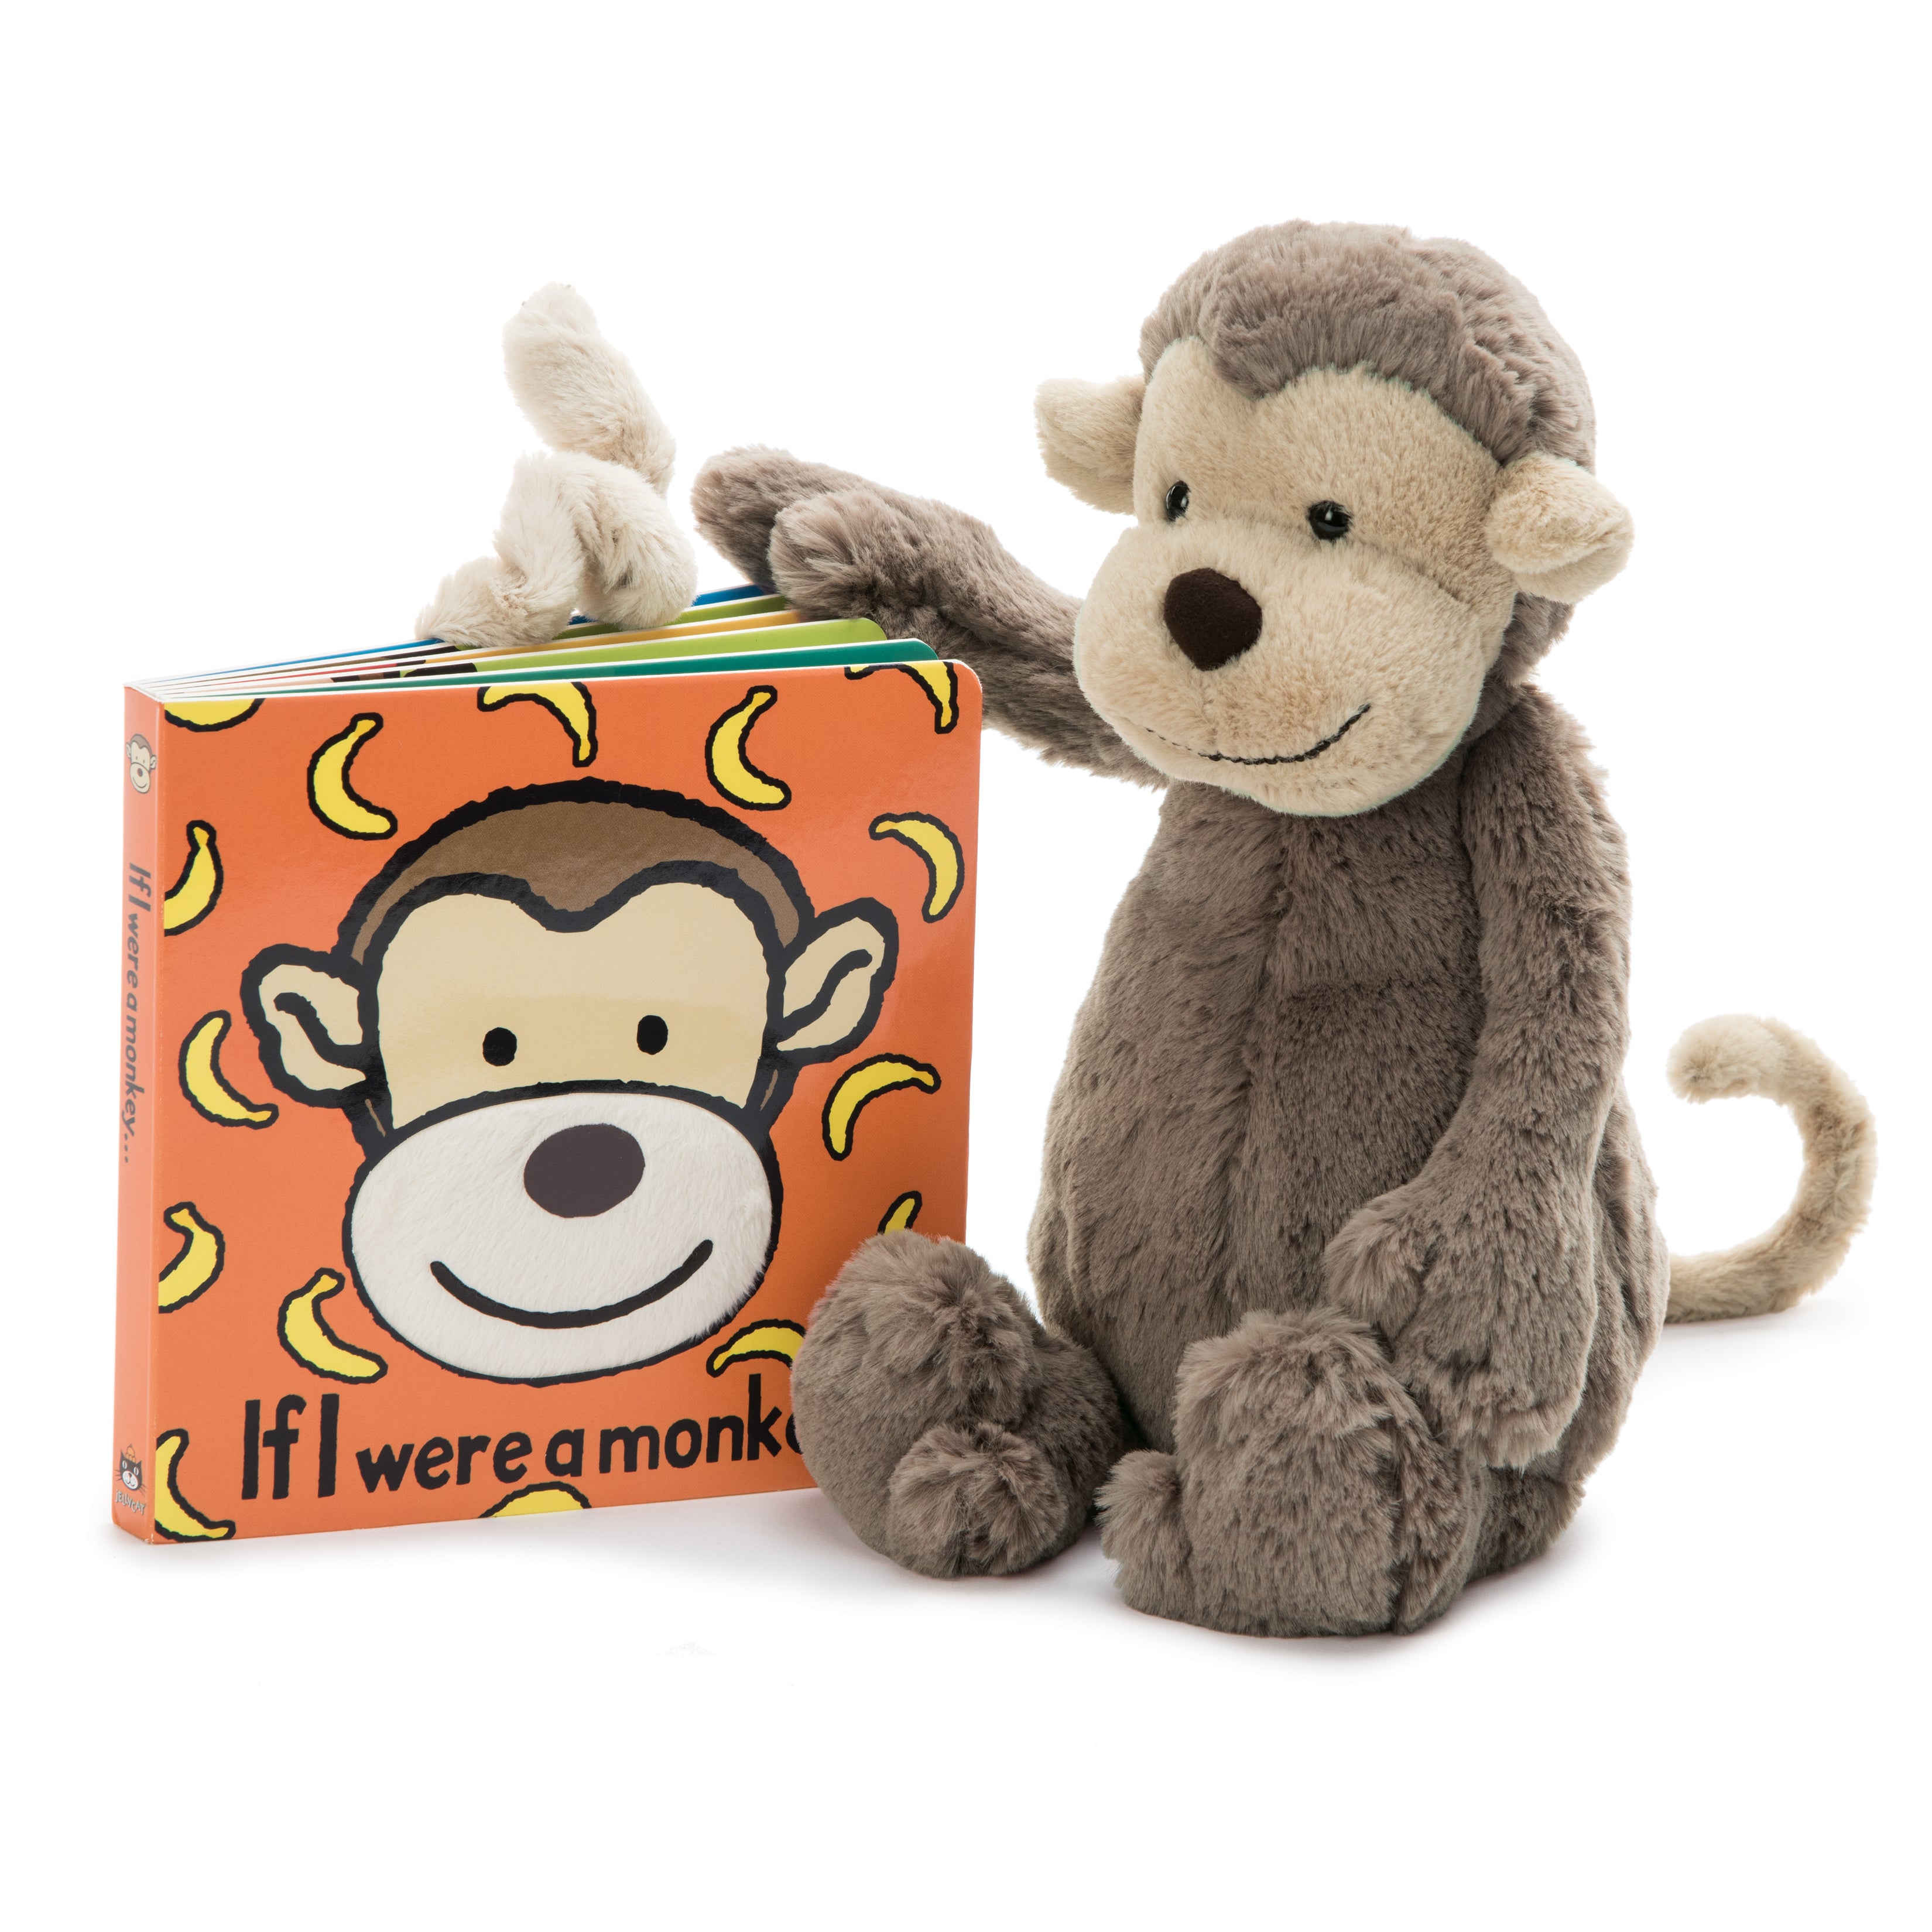 jellycat i know a monkey book